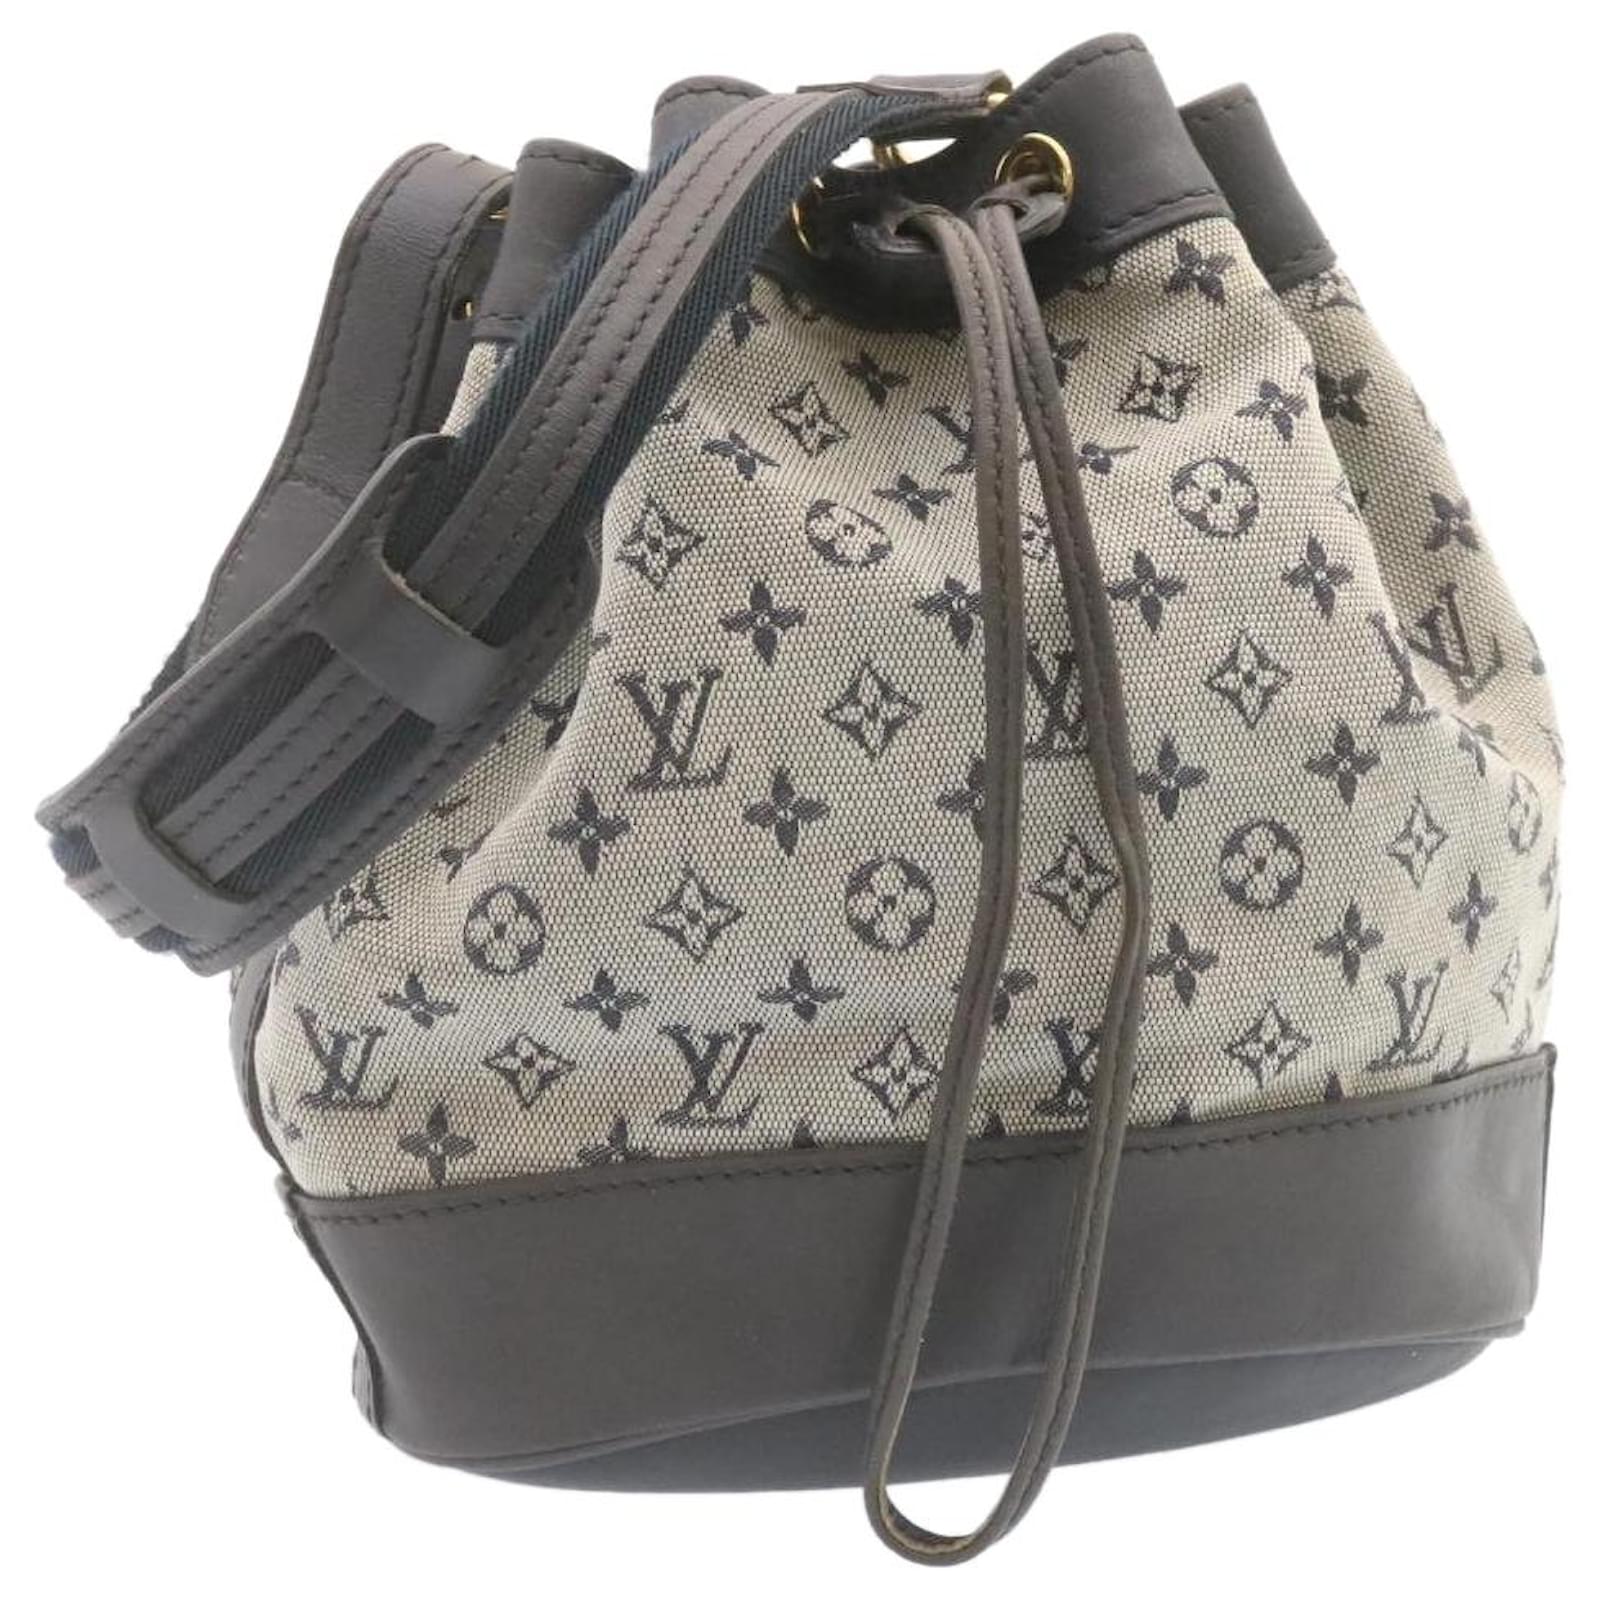 Louis Vuitton Monogram Womens Shoulder Bags, Navy